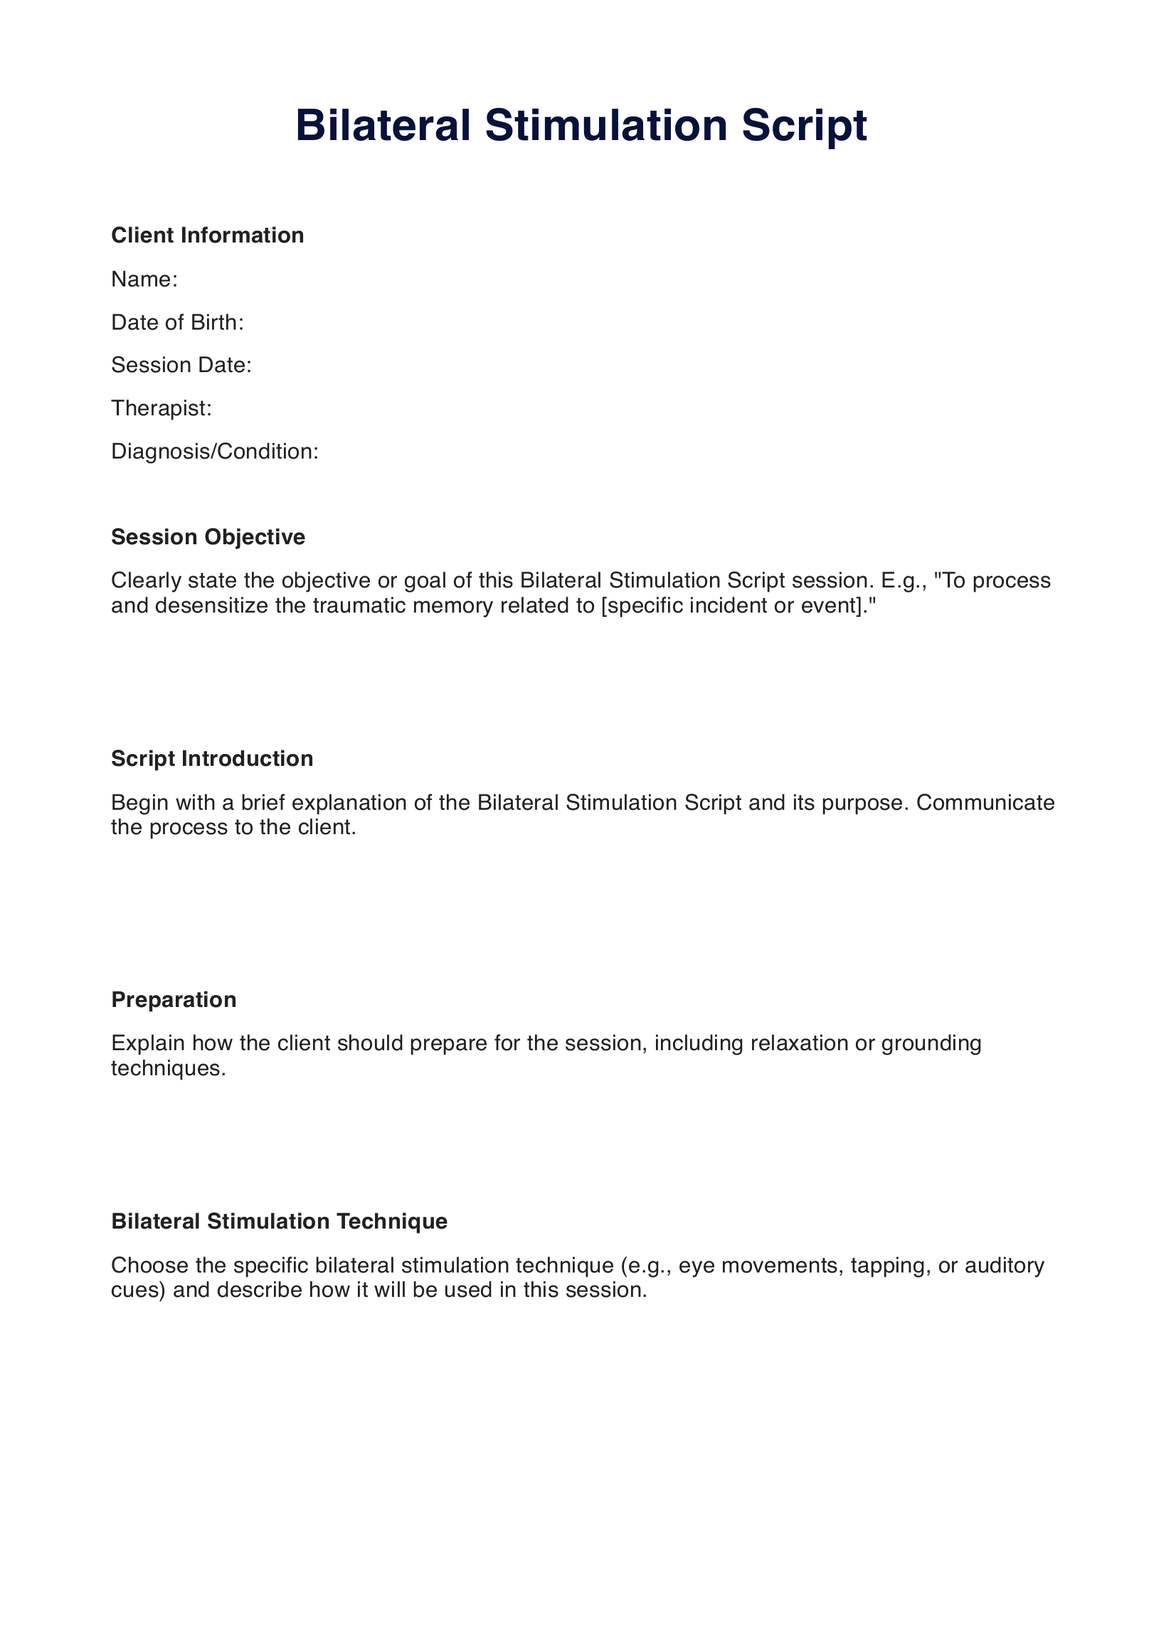 Bilateral Stimulation Script PDF Example